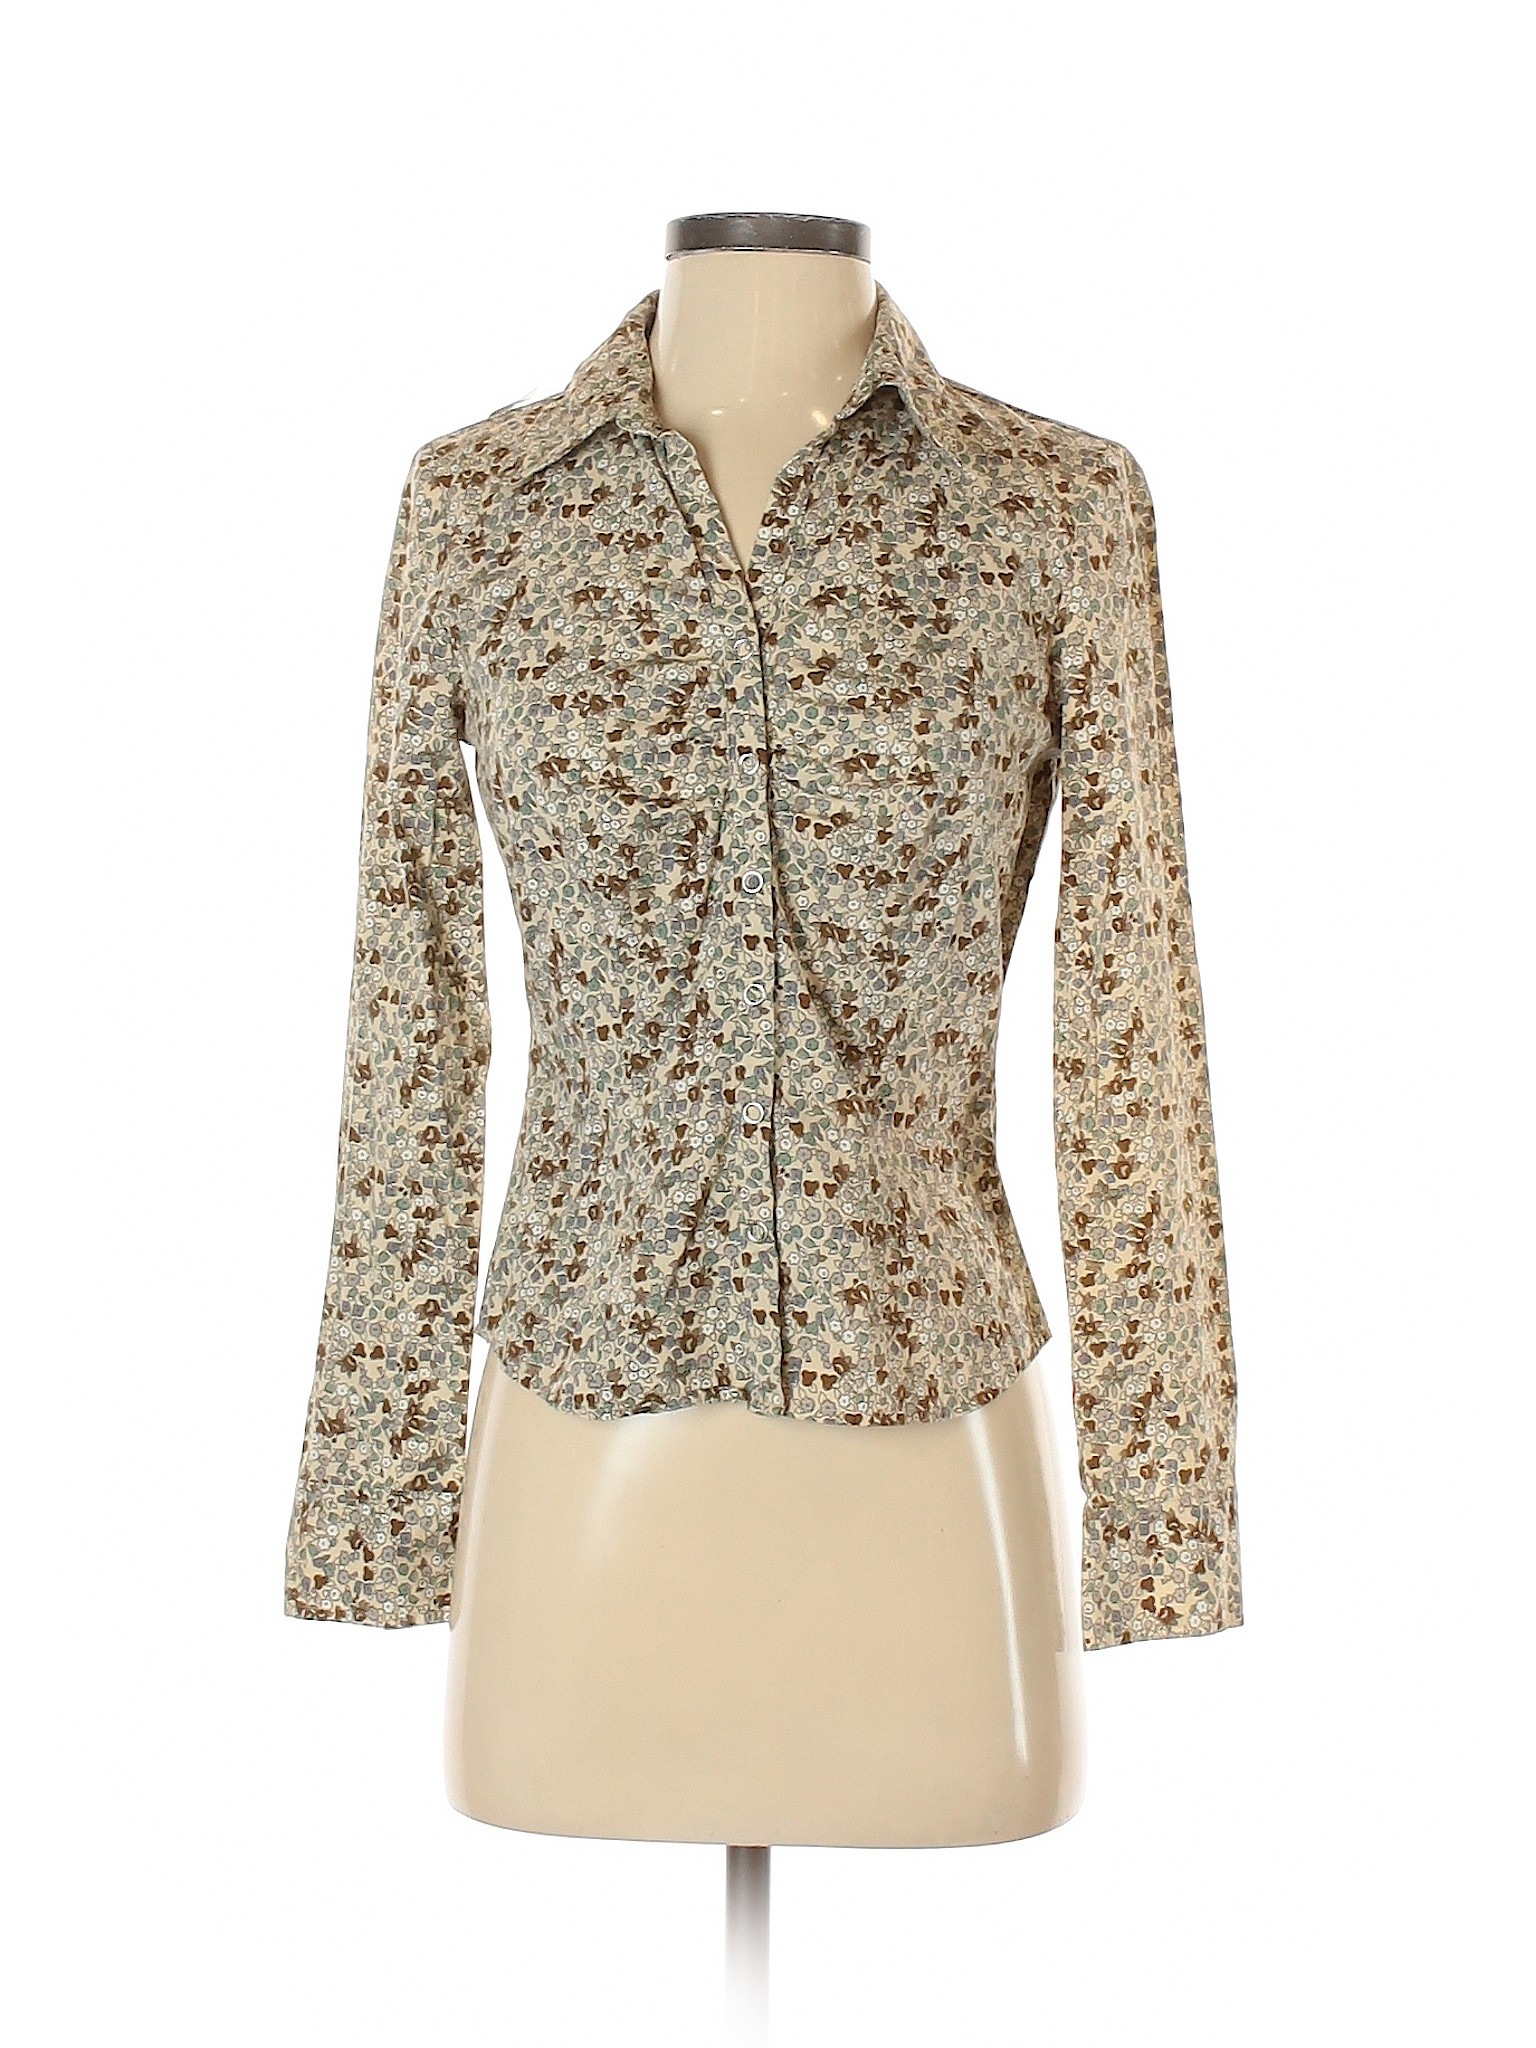 Old Navy Women Brown Long Sleeve Blouse XS | eBay